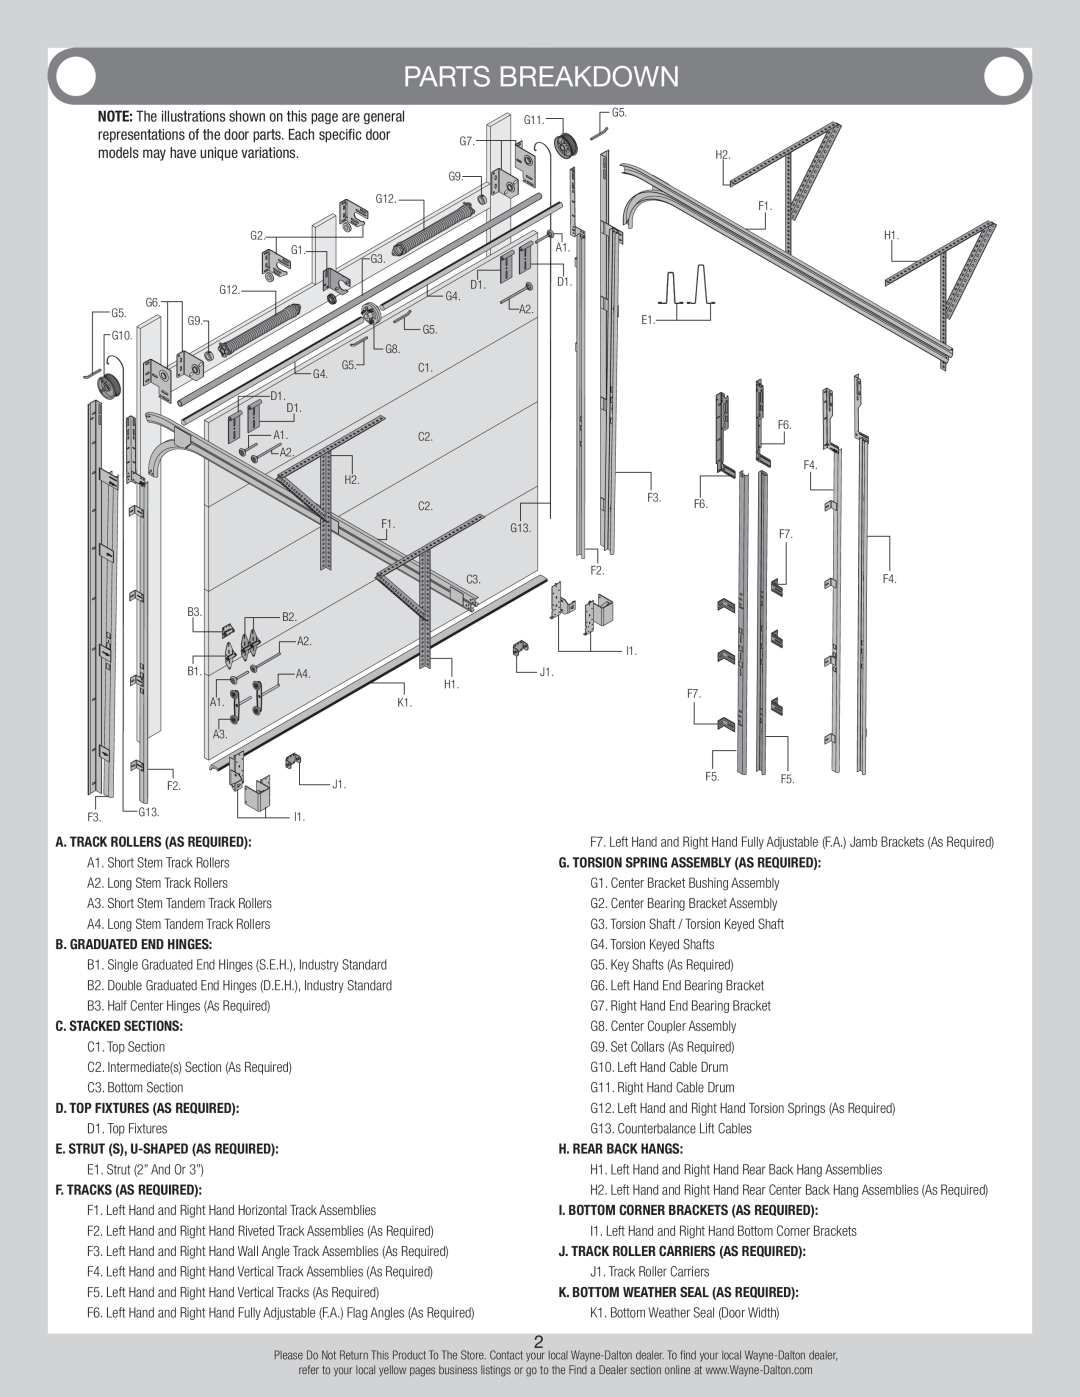 Wayne-Dalton 347610 installation instructions Parts Breakdown 